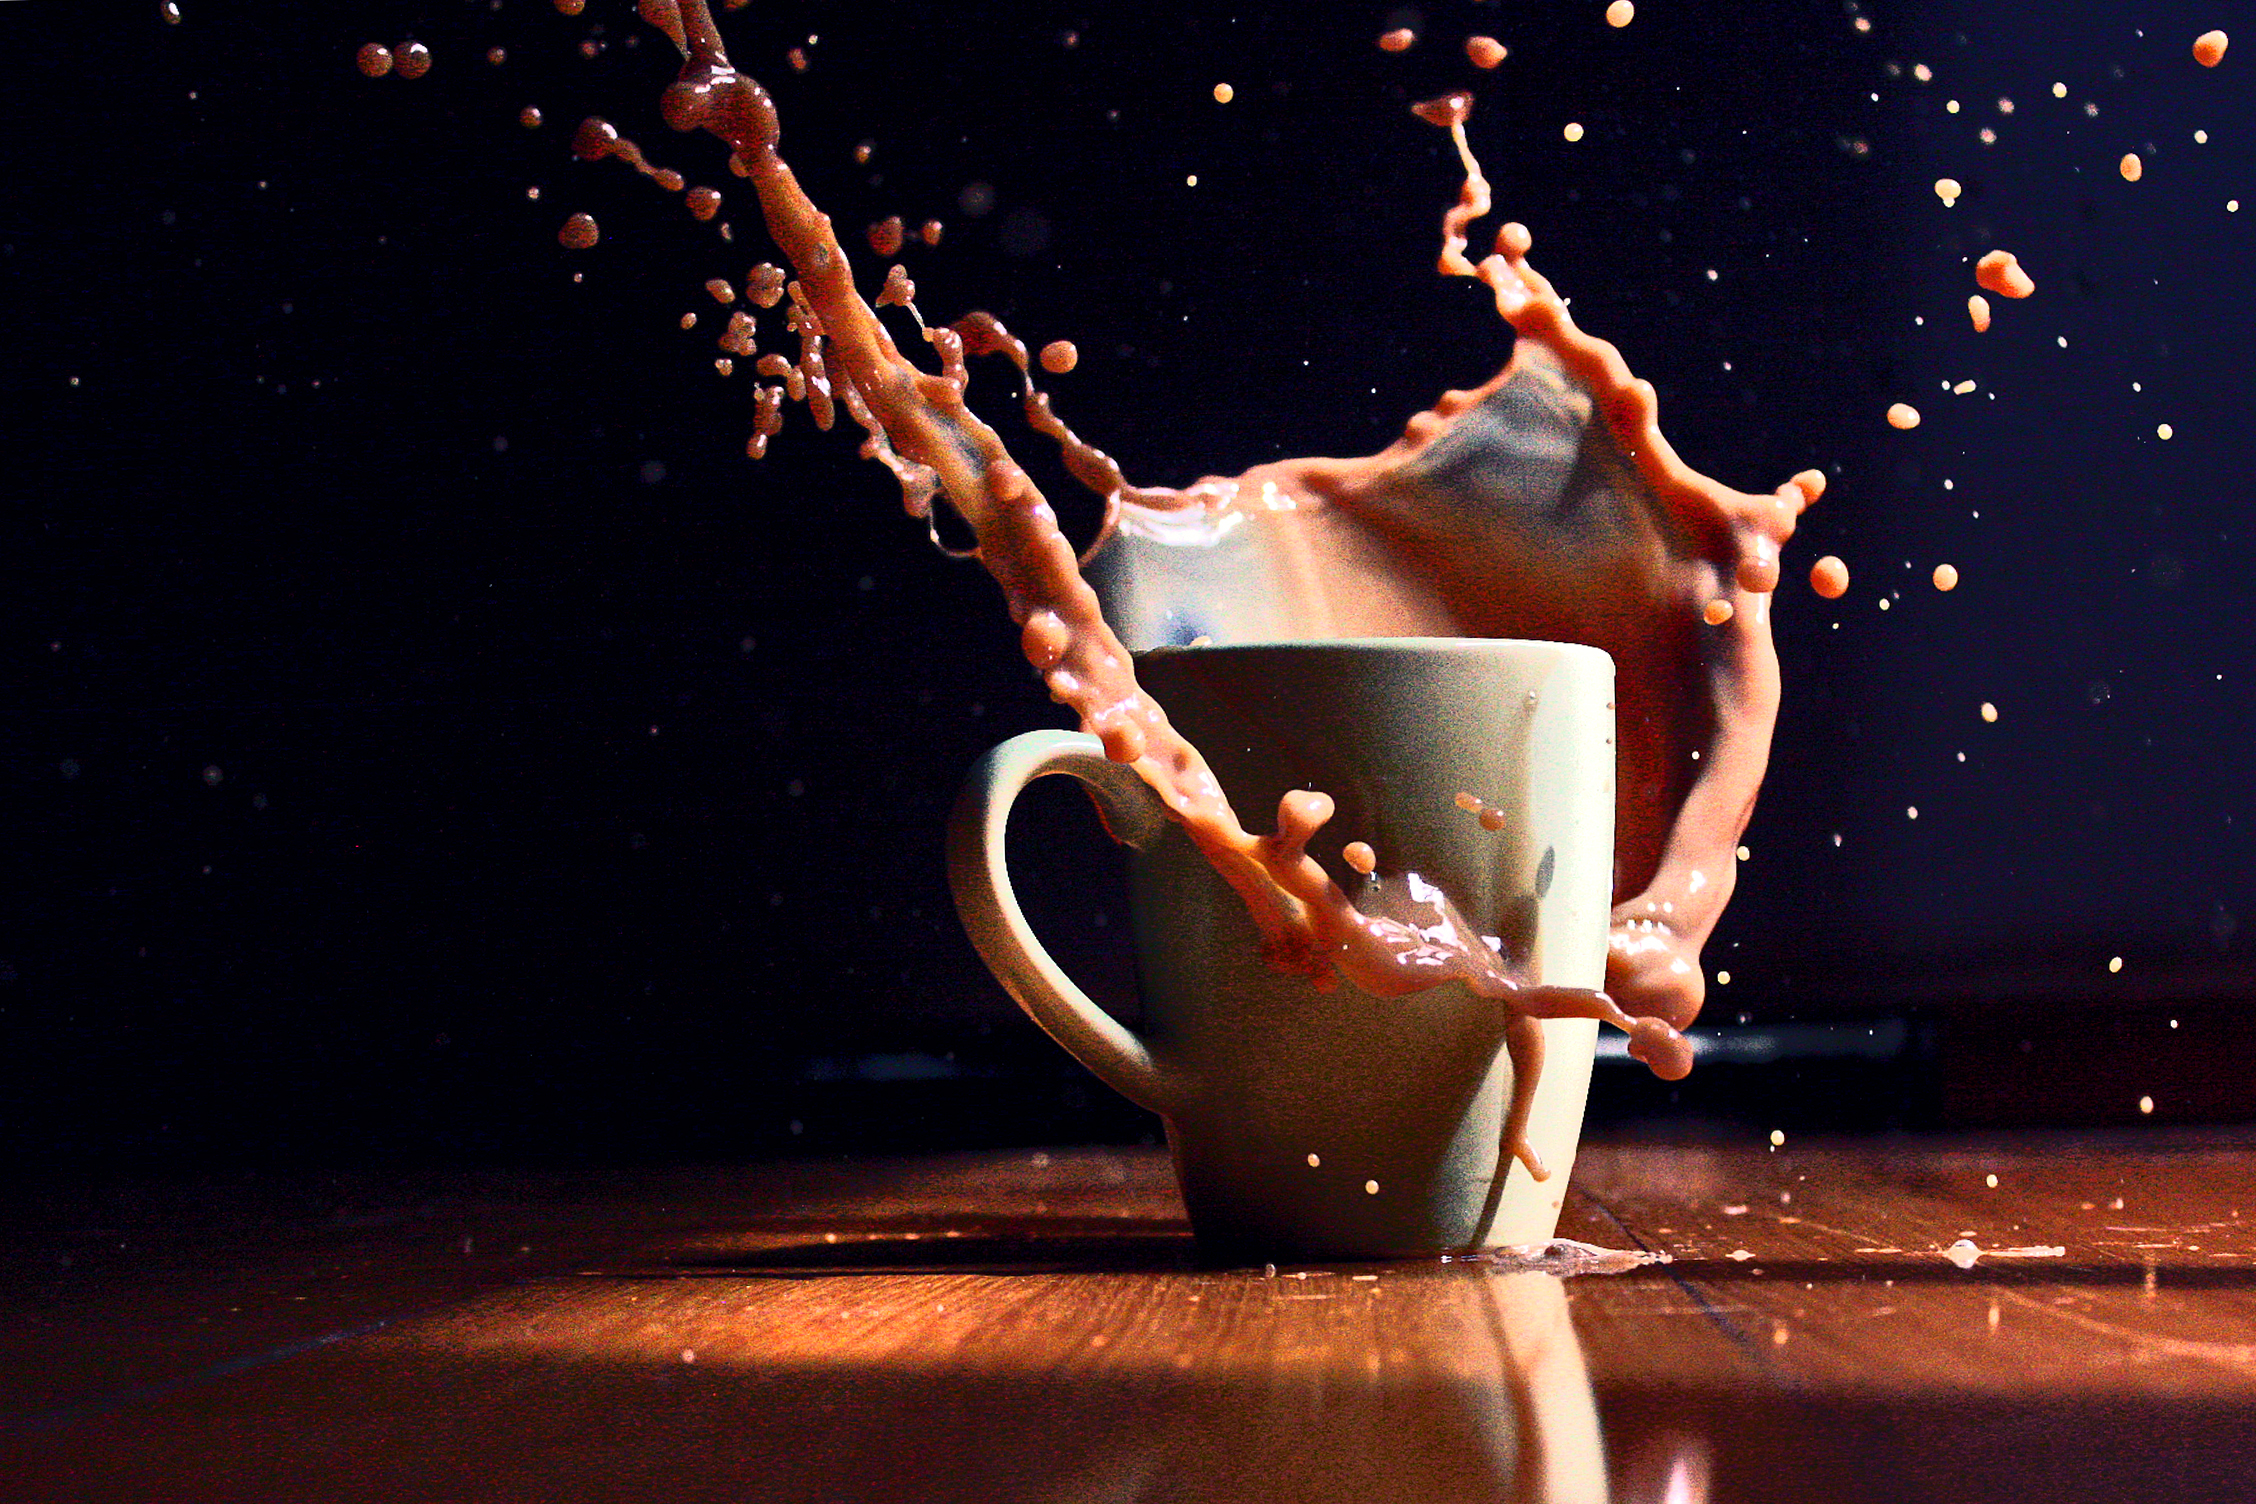 Wallpaper Night Space Coffee Canon Dancer Rebel Splash